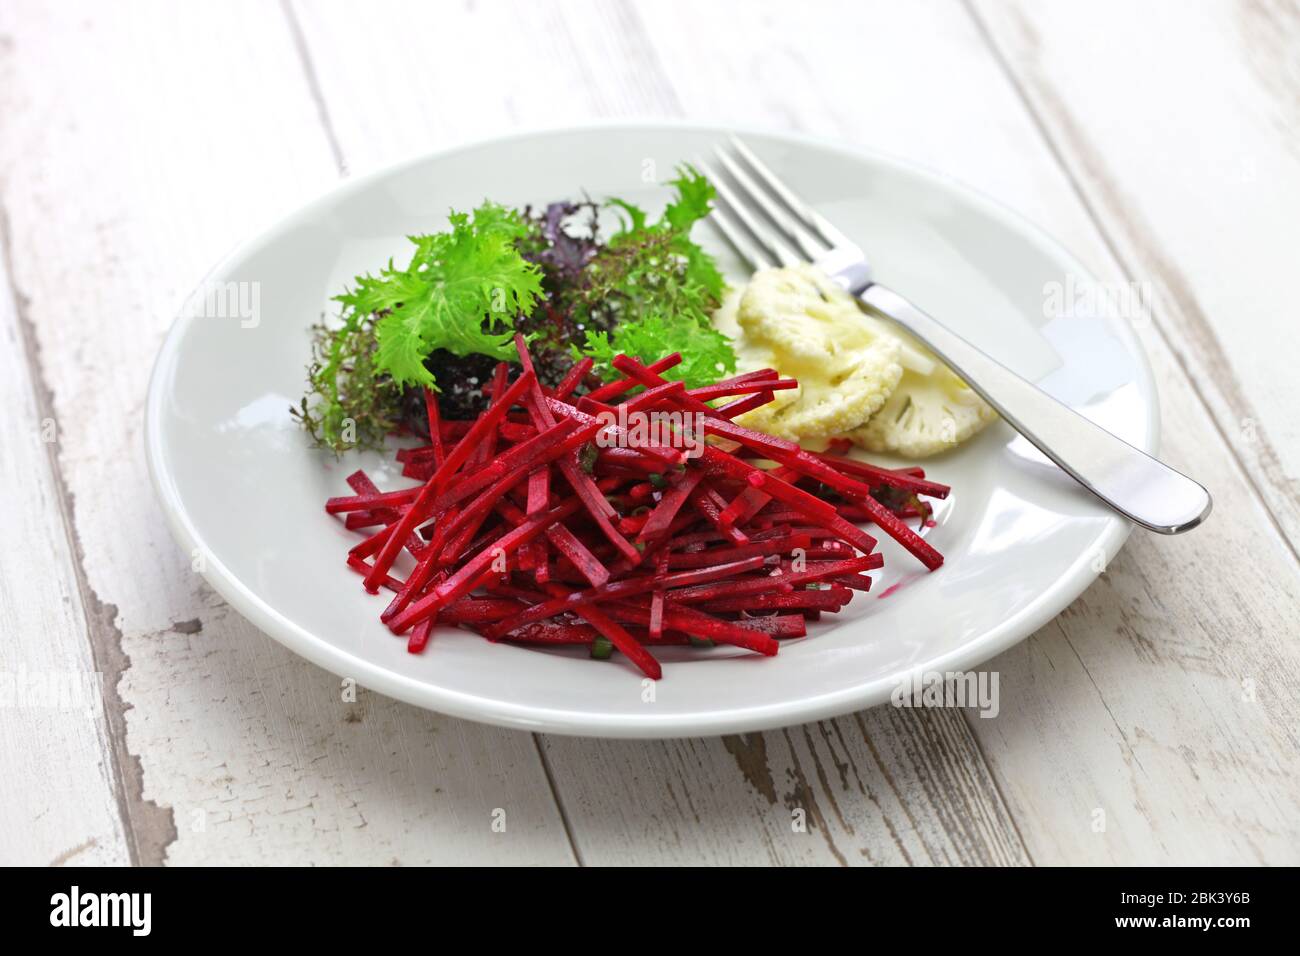 insalata di barbabietole julienne, cucina vegetariana sana Foto Stock